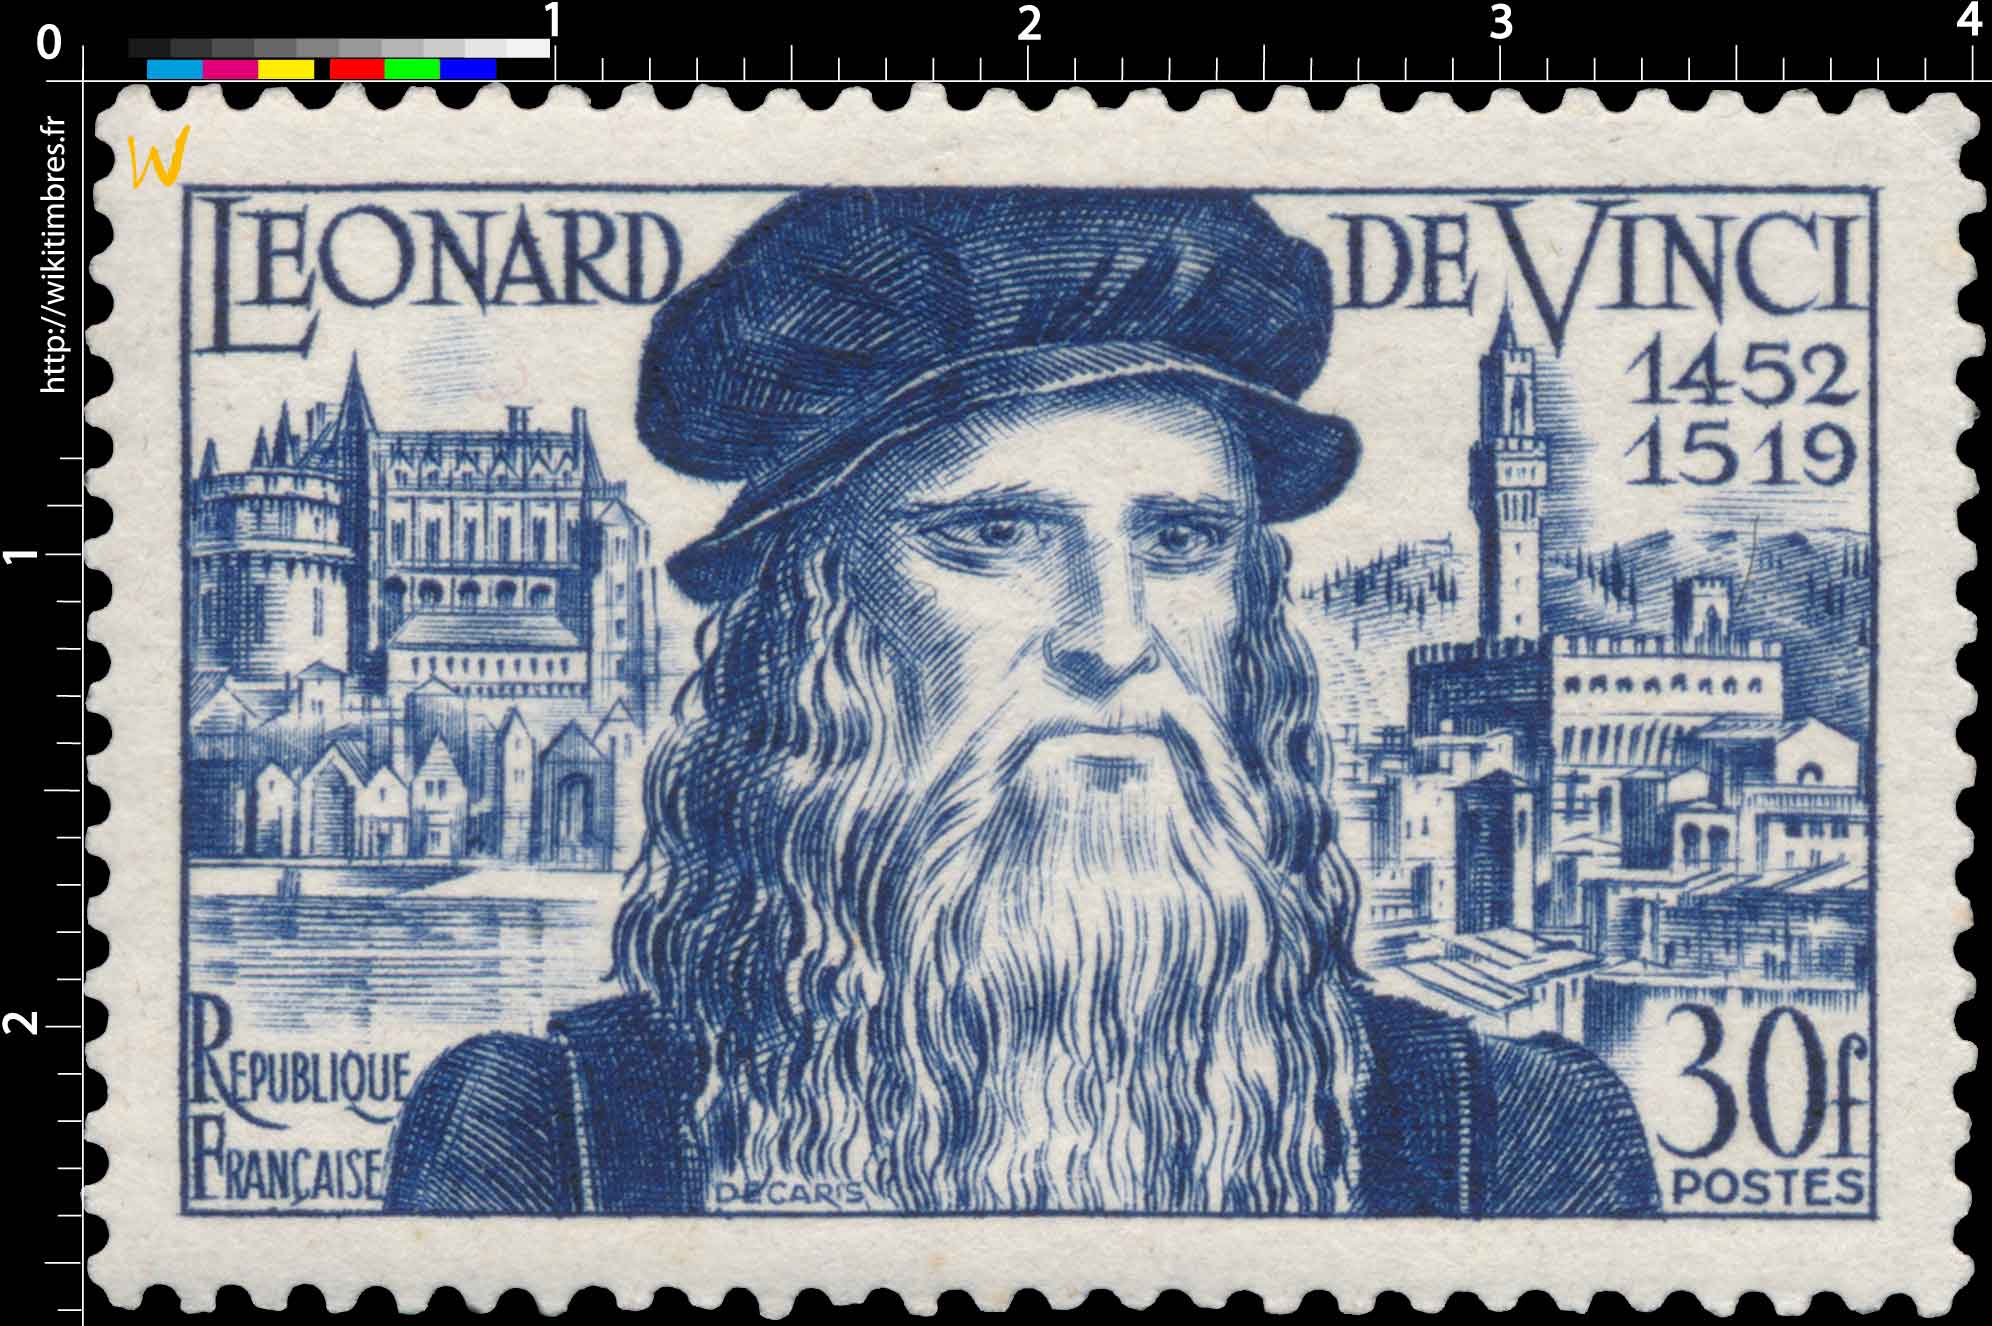 LEONARD DE VINCI 1452-1519